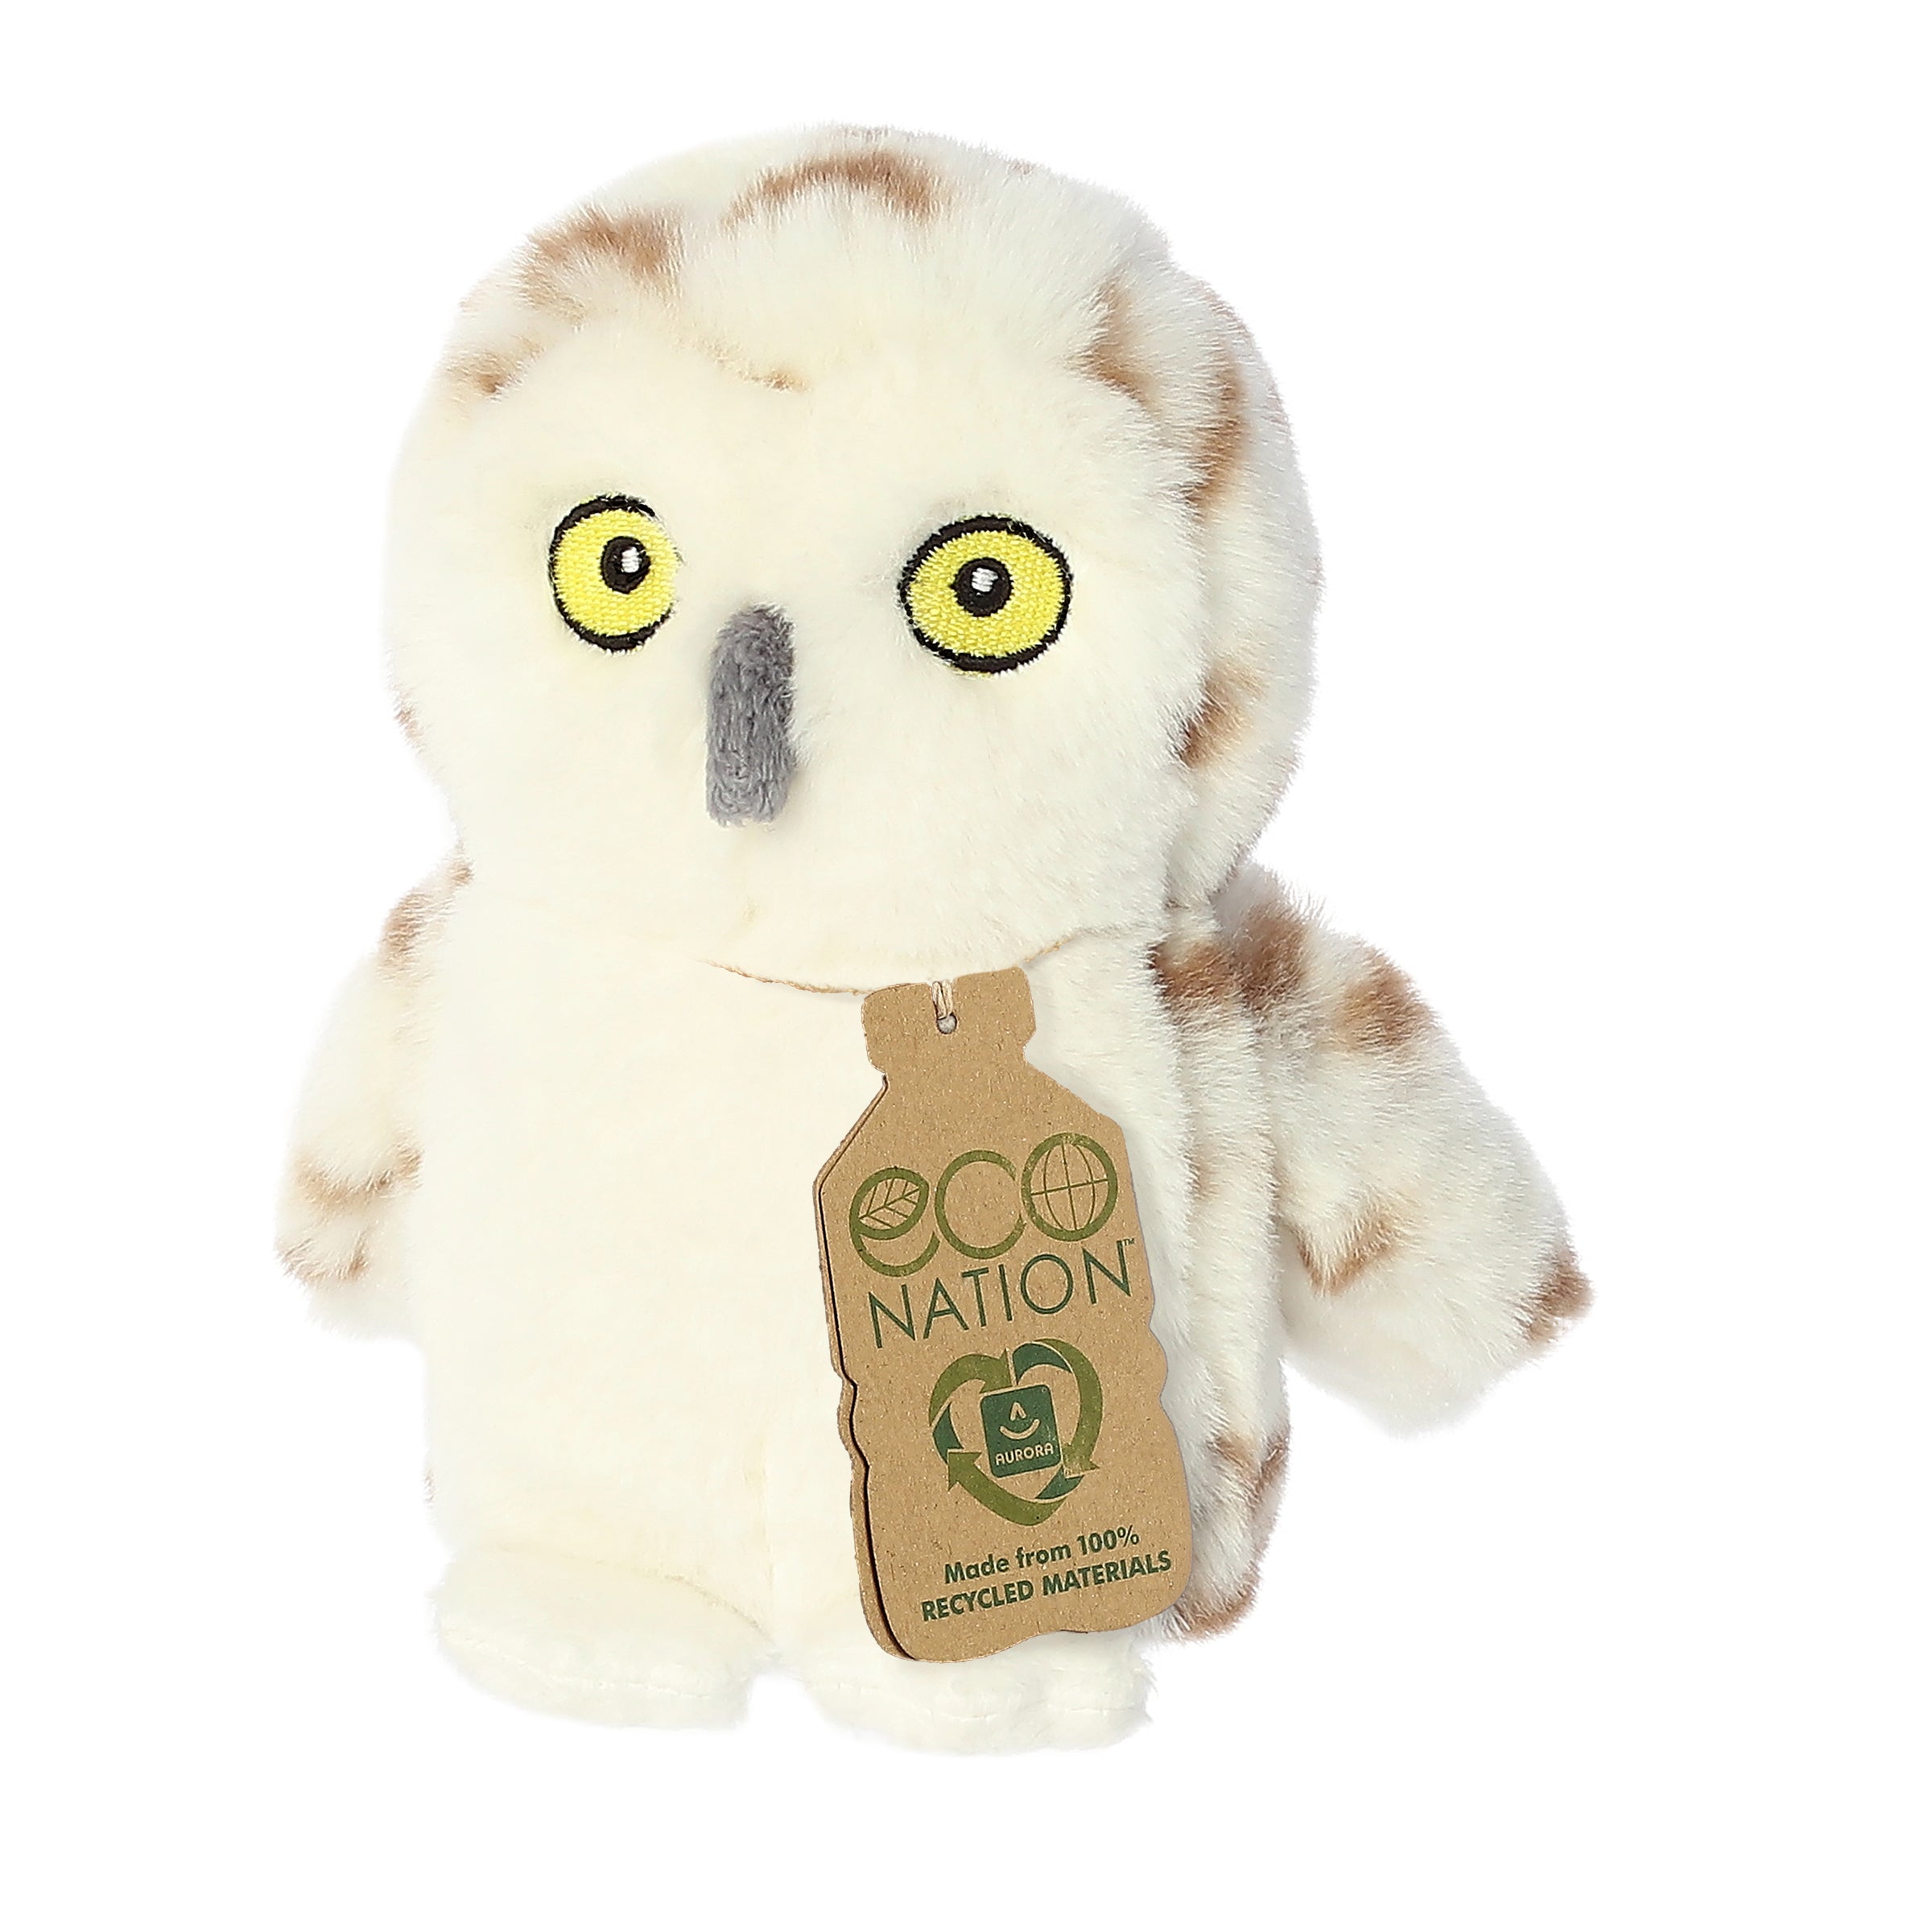 Owl Ã¢â‚¬â€œ Delightful Eco-Nation Stuffed Animals Ã¢â‚¬â€œ Aurora